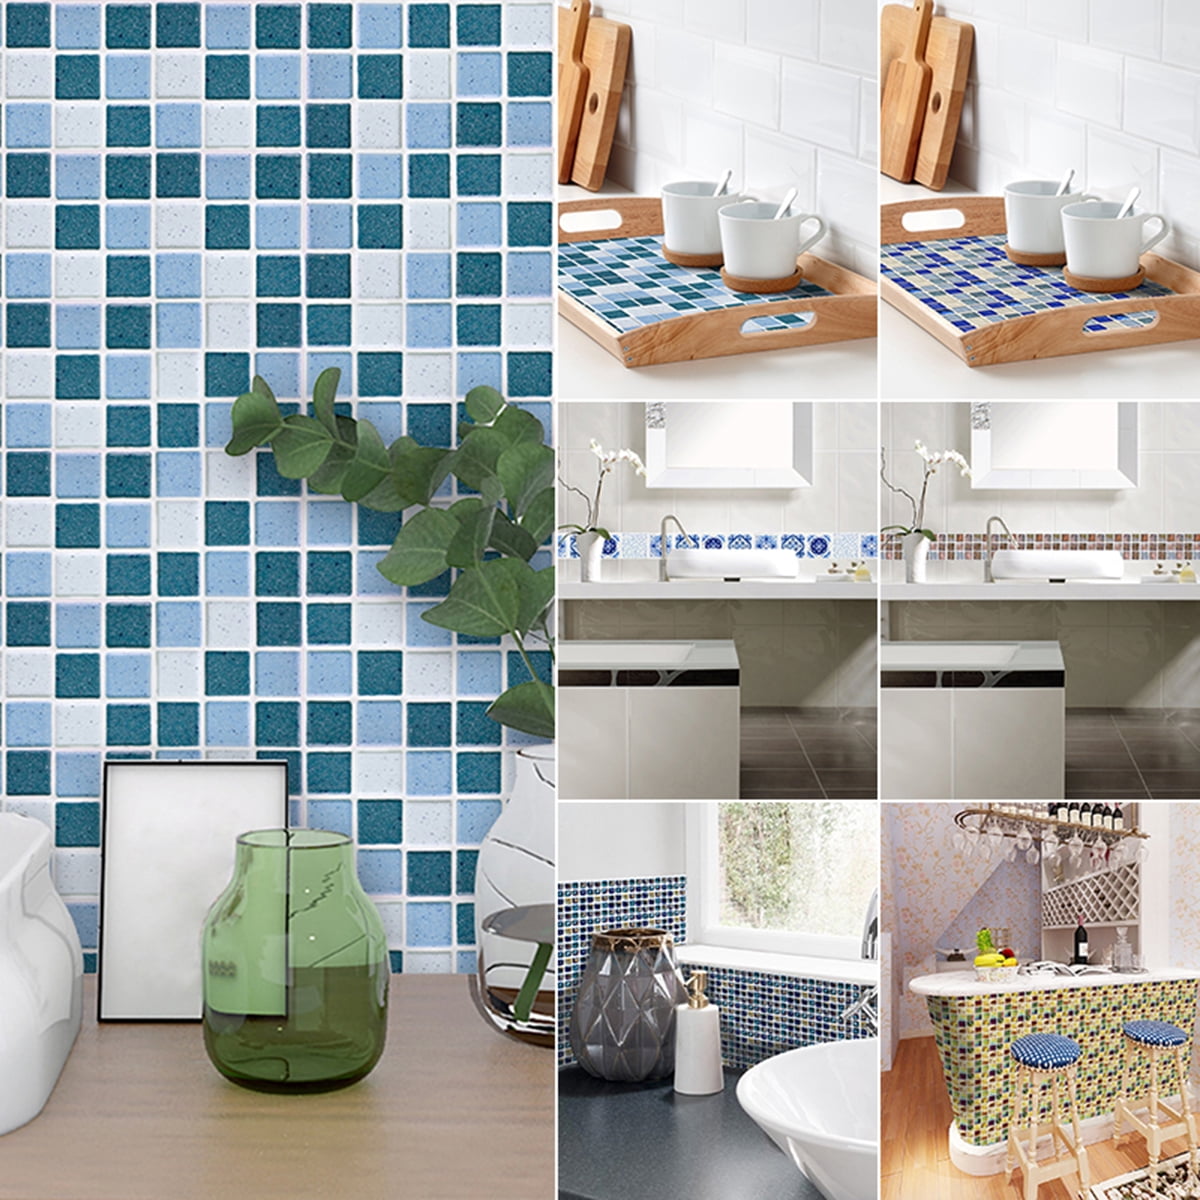 3D Wall Stickers Tile Waistline Self-adhesive Kitchen Bathroom Waterproof Modern